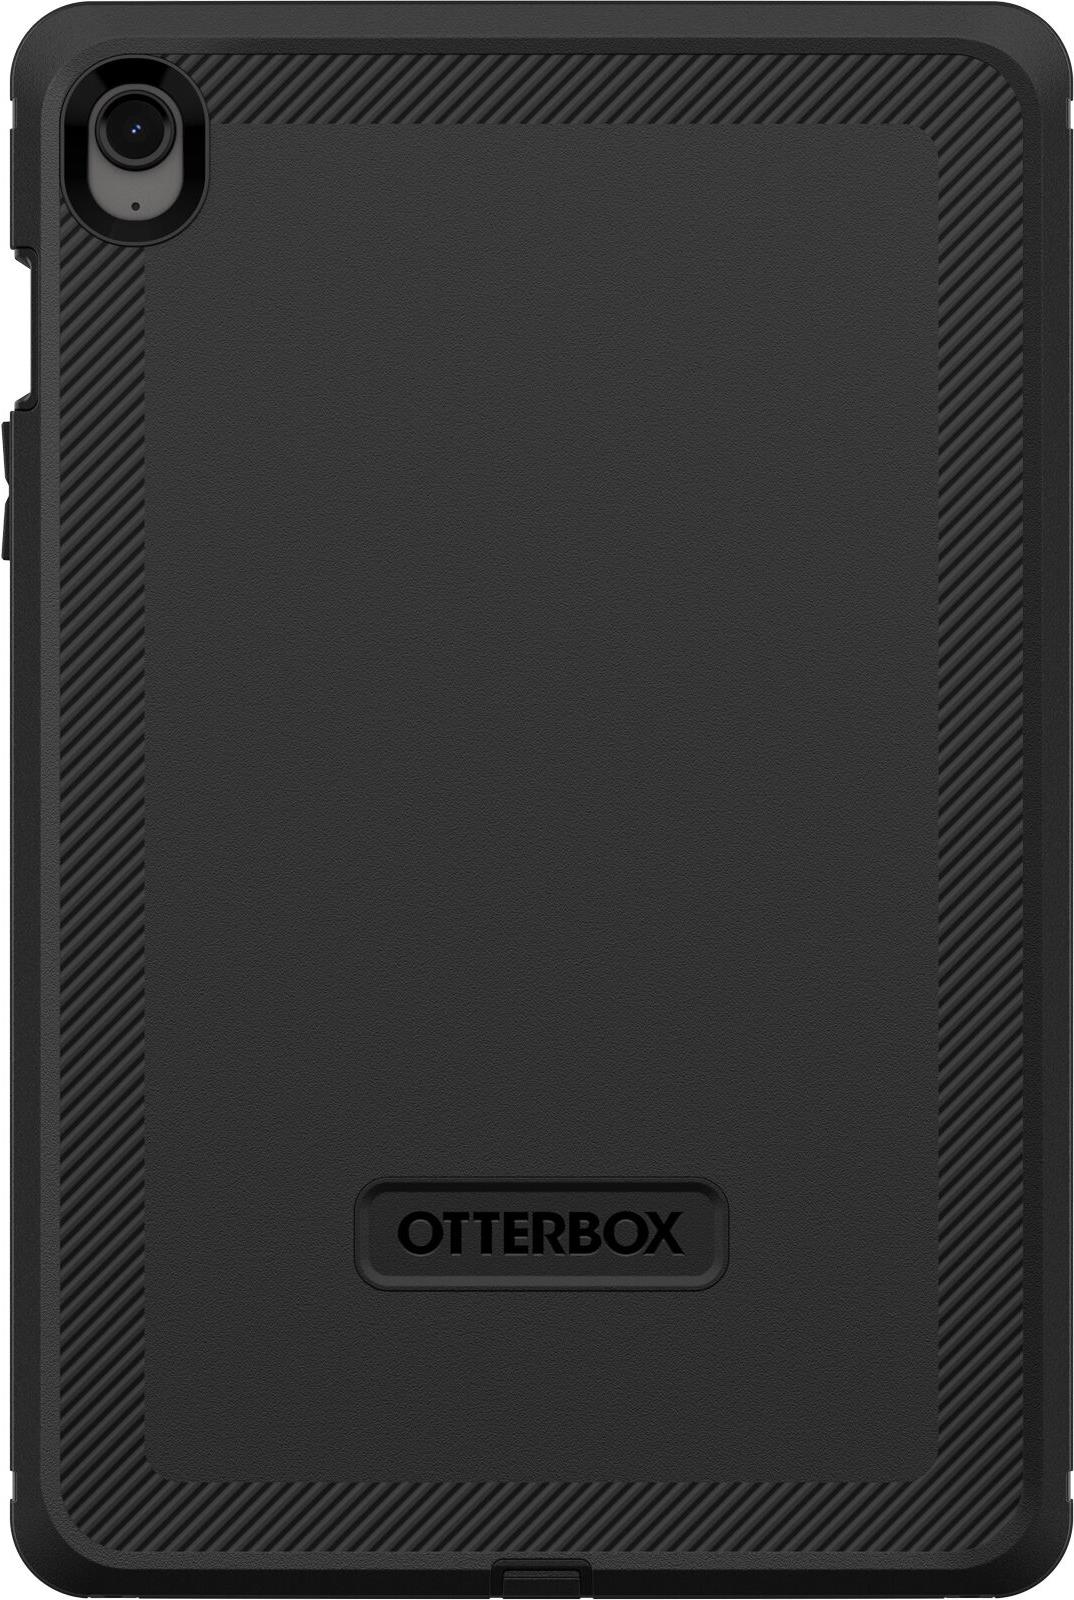 OtterBox Defender Series (77-95041)